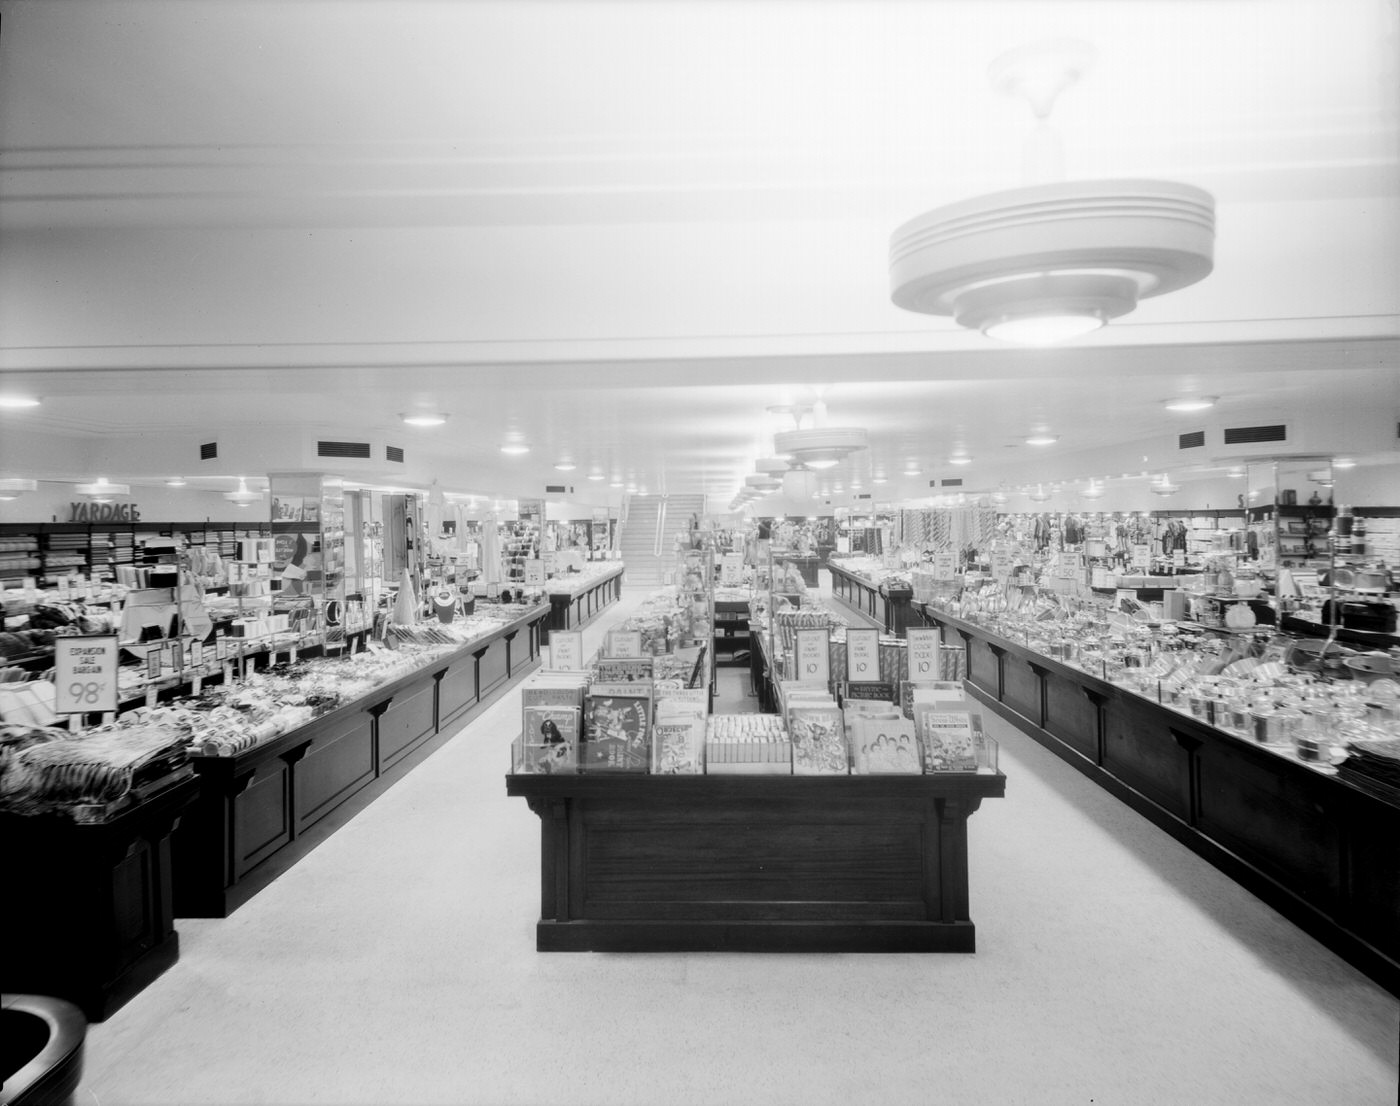 J. J. Newberry Co. Store Interior, 1930s